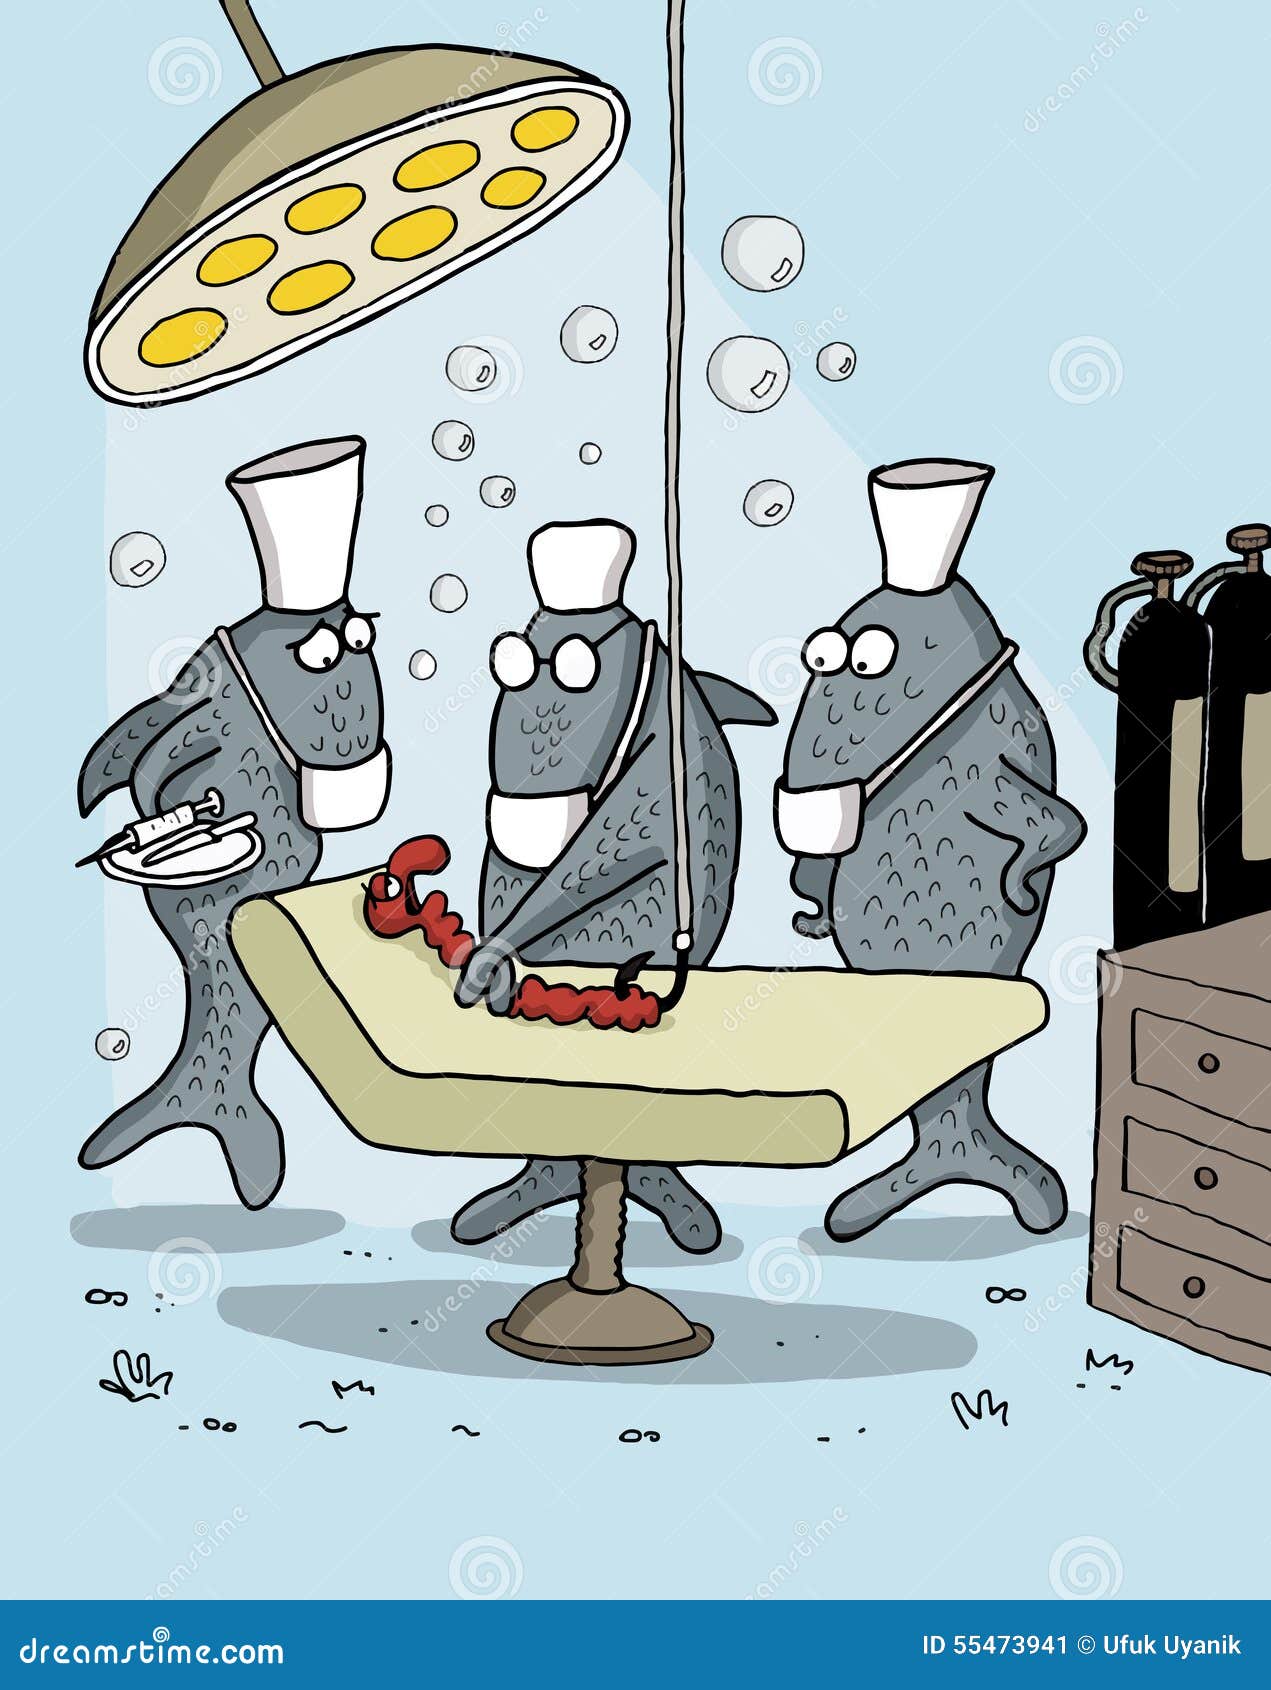 Doctorfish By wista, Nature Cartoon